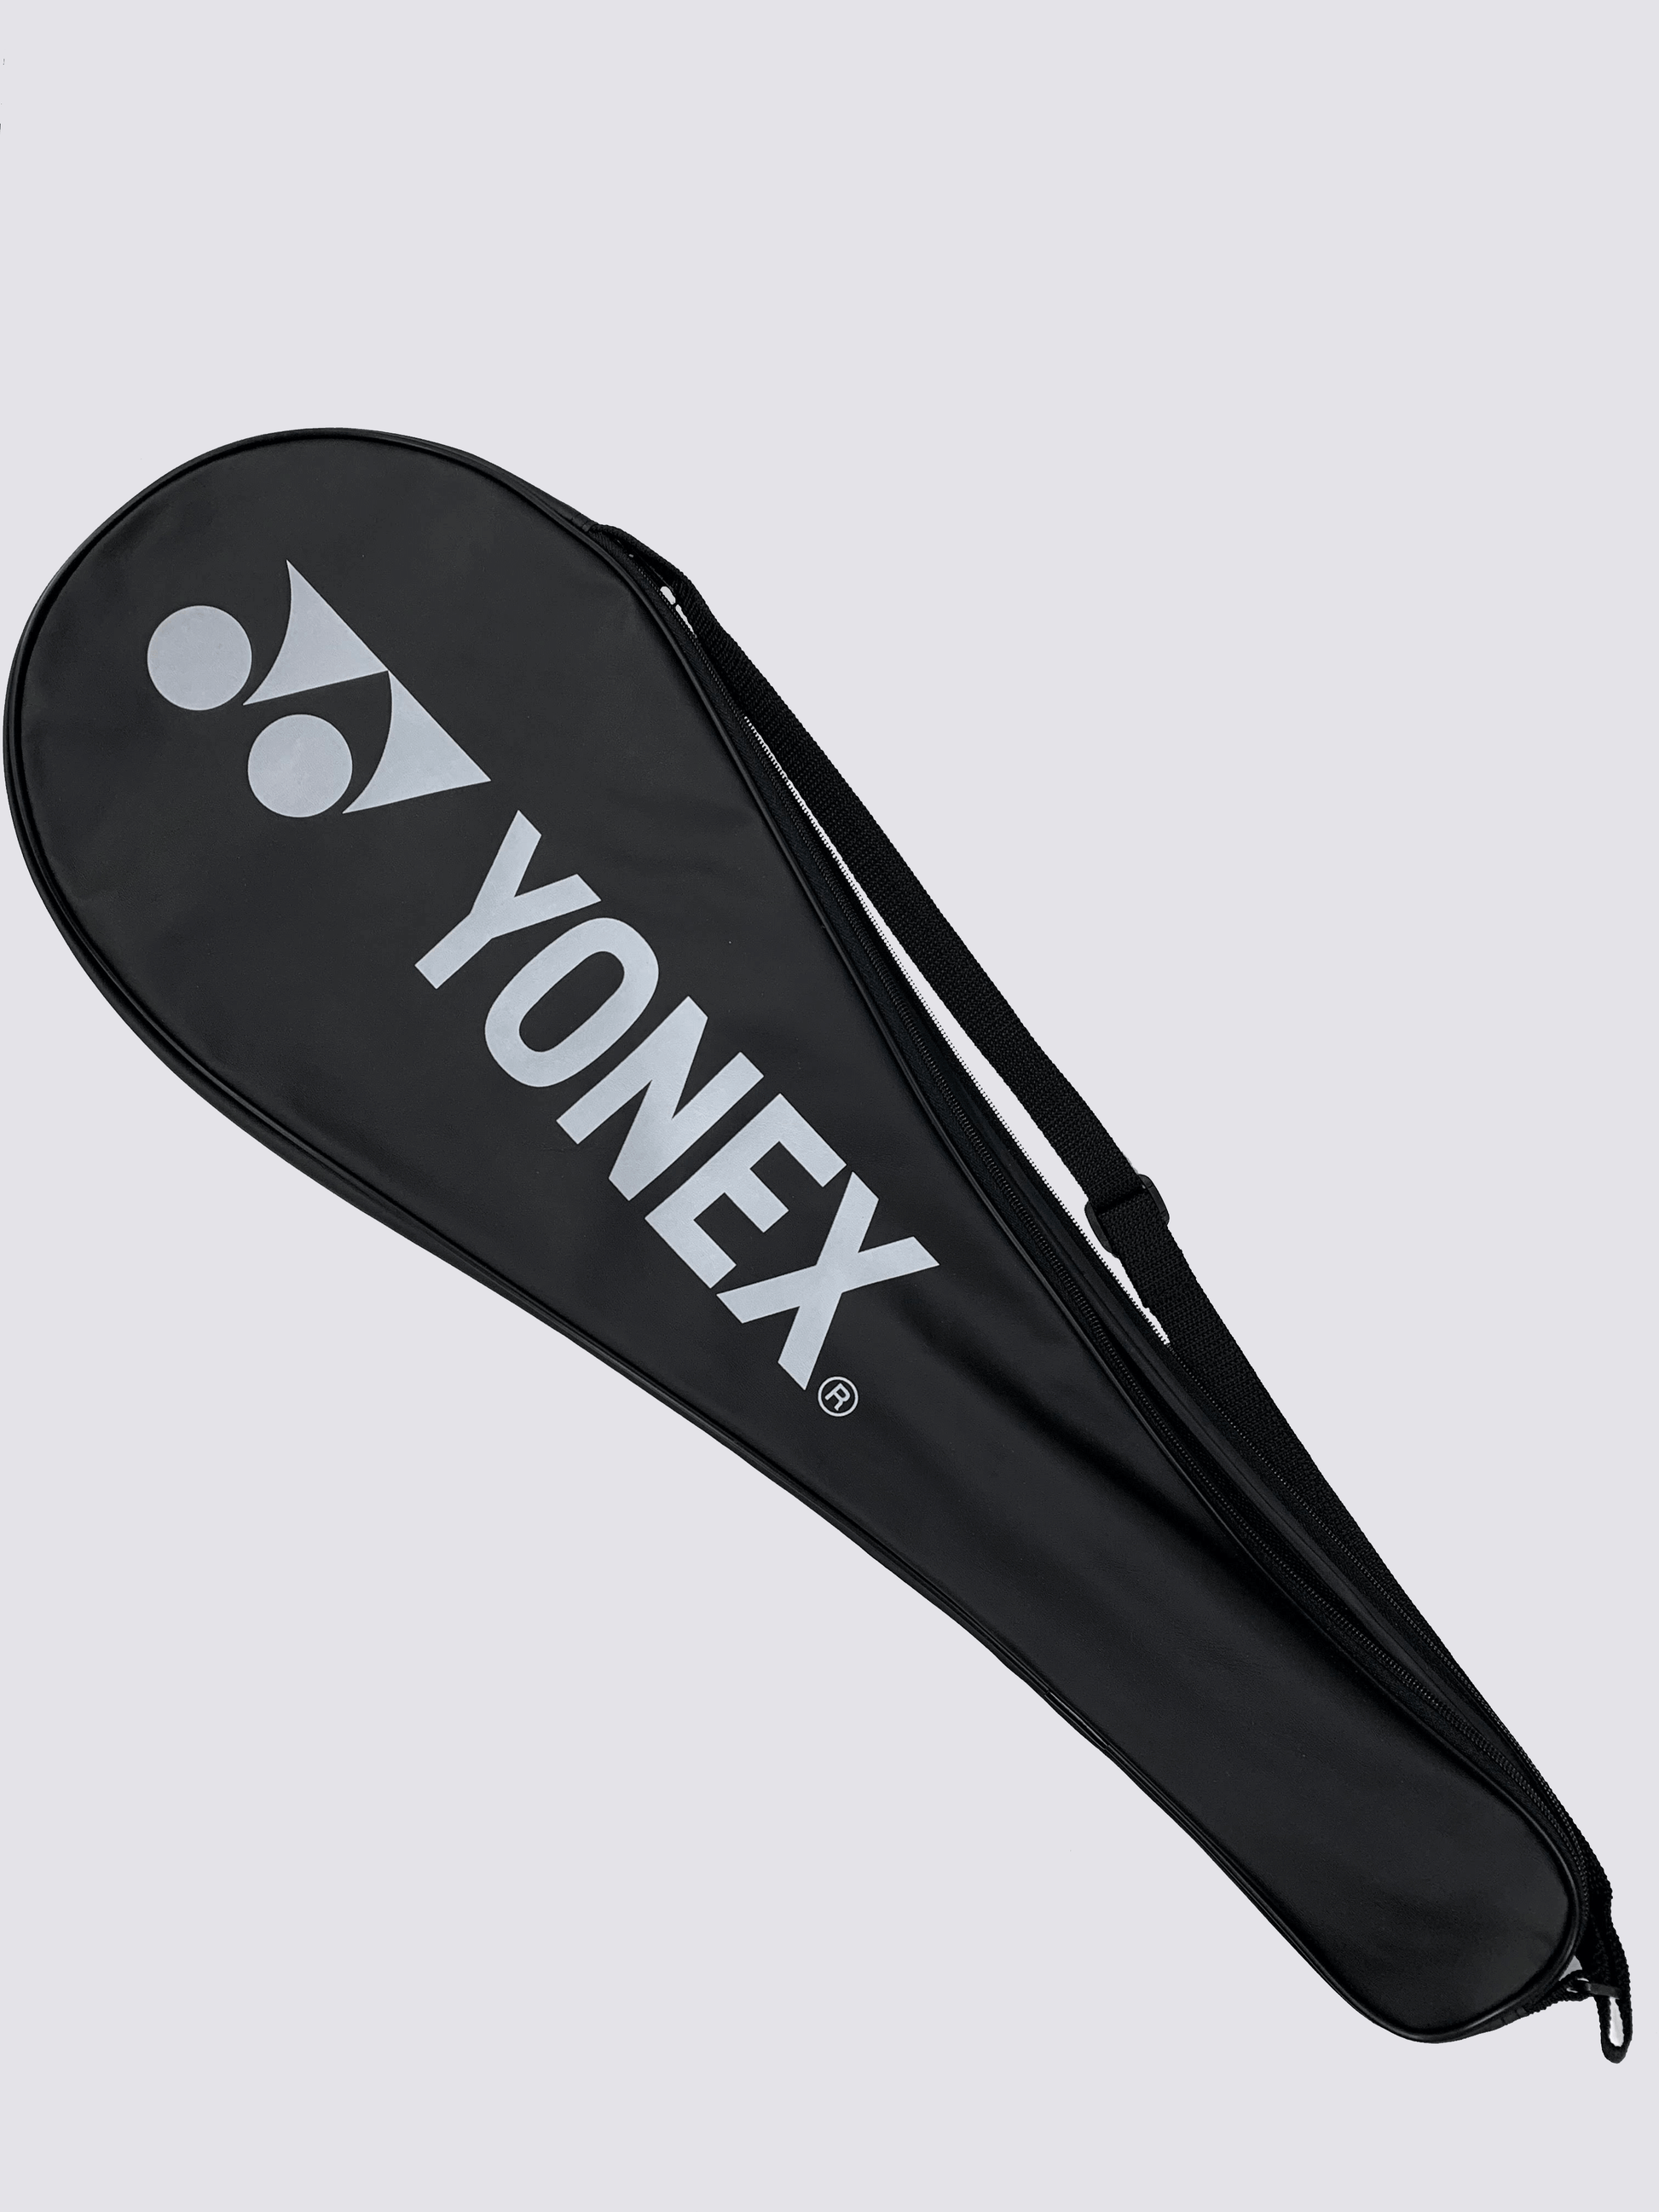 Yonex Astrox 2 (Black / Blue)